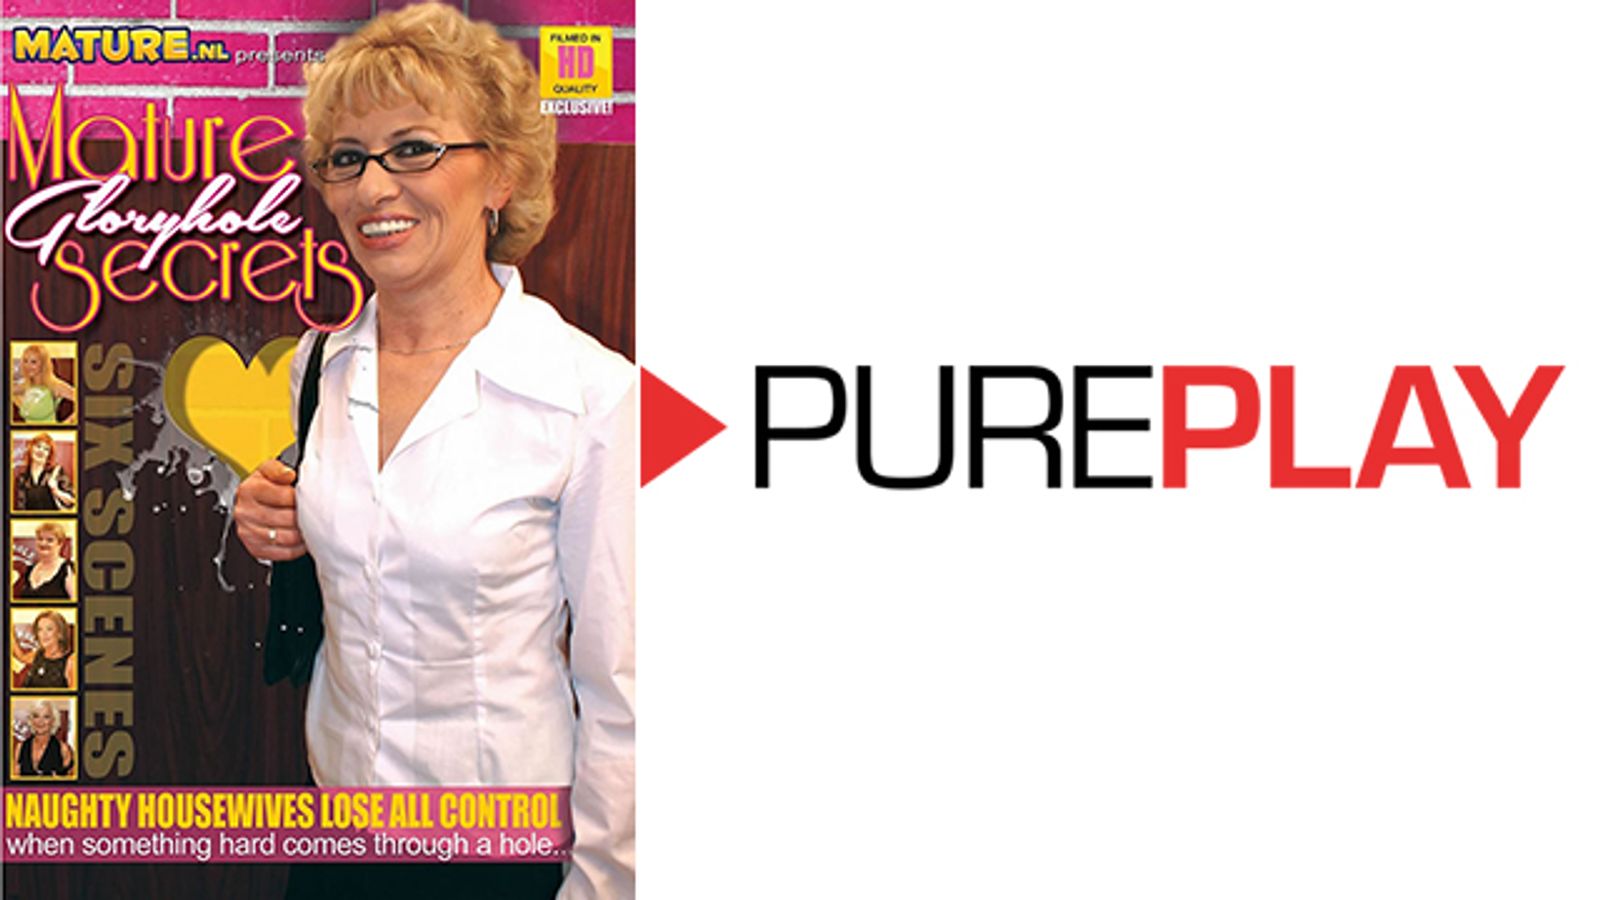 Pure Play Media & Mature.NL Release 'Mature Gloryhole Secrets'